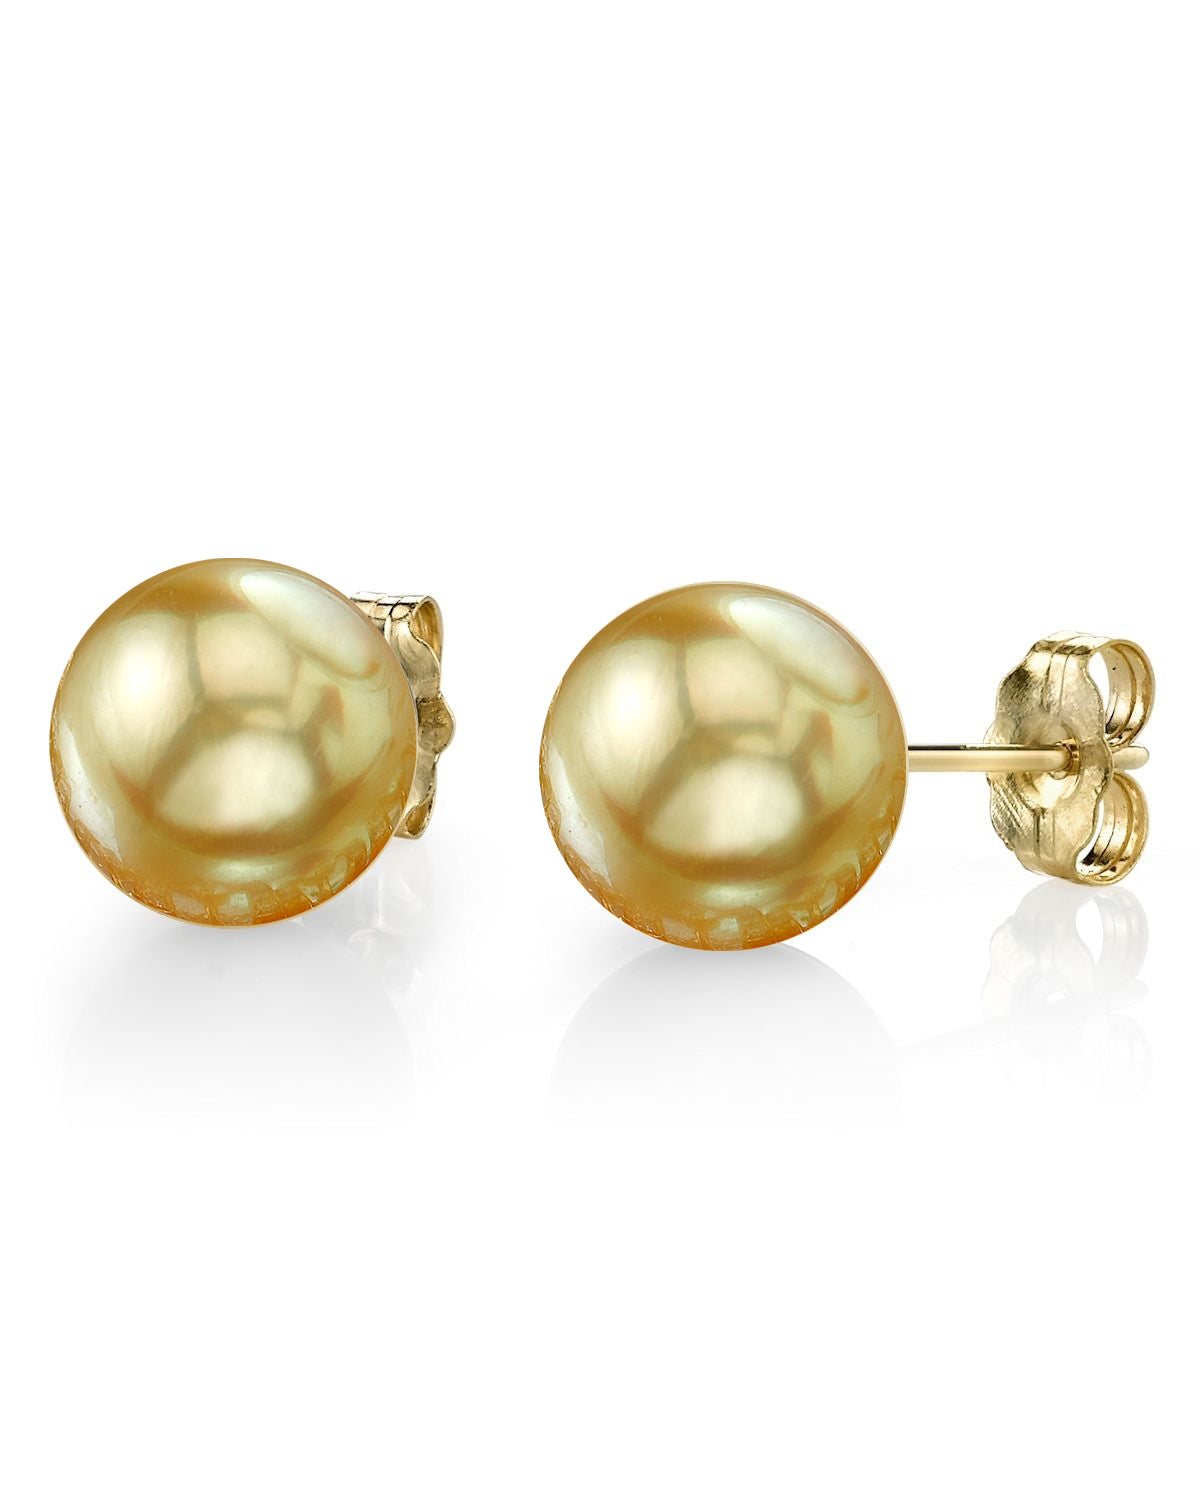 Tiffany South Sea Pearl Earrings